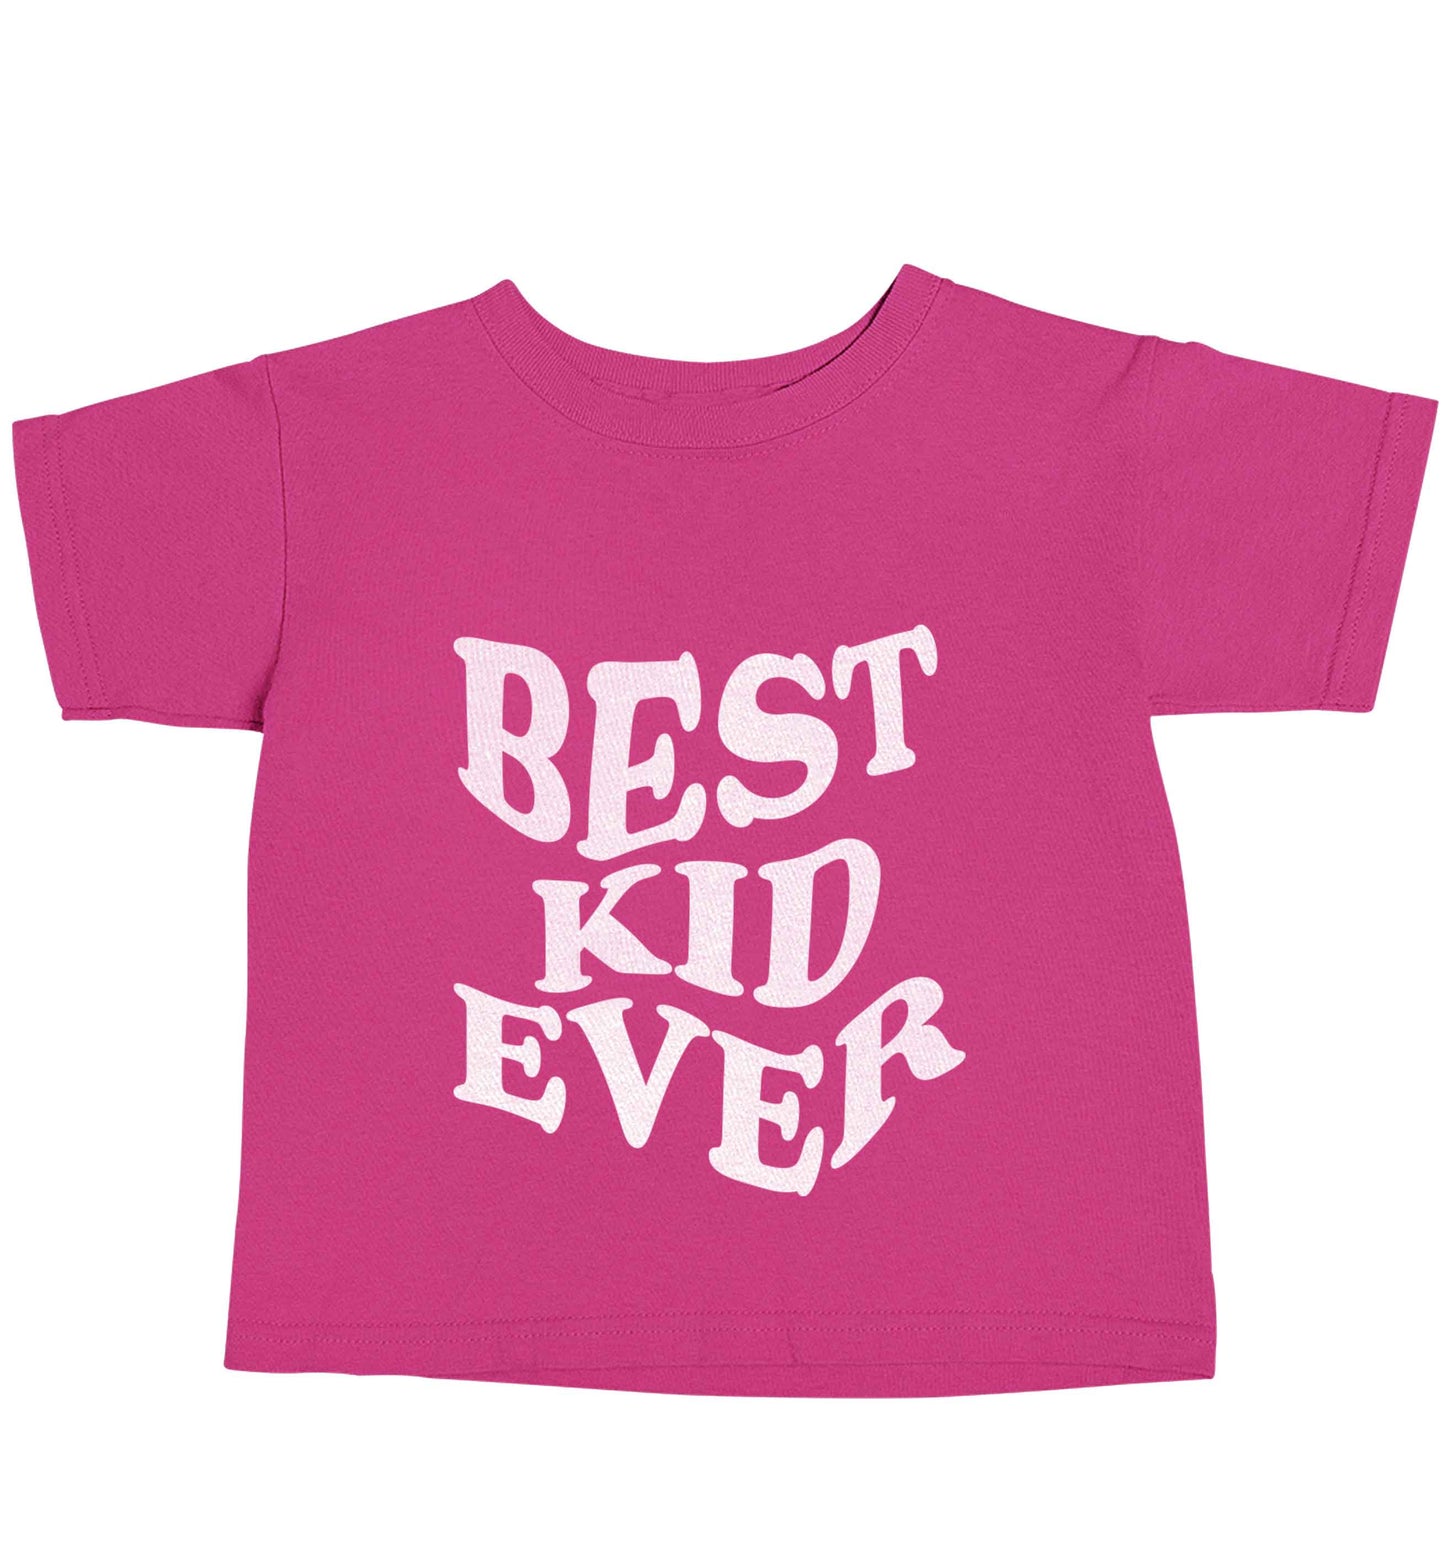 Best kid ever pink baby toddler Tshirt 2 Years